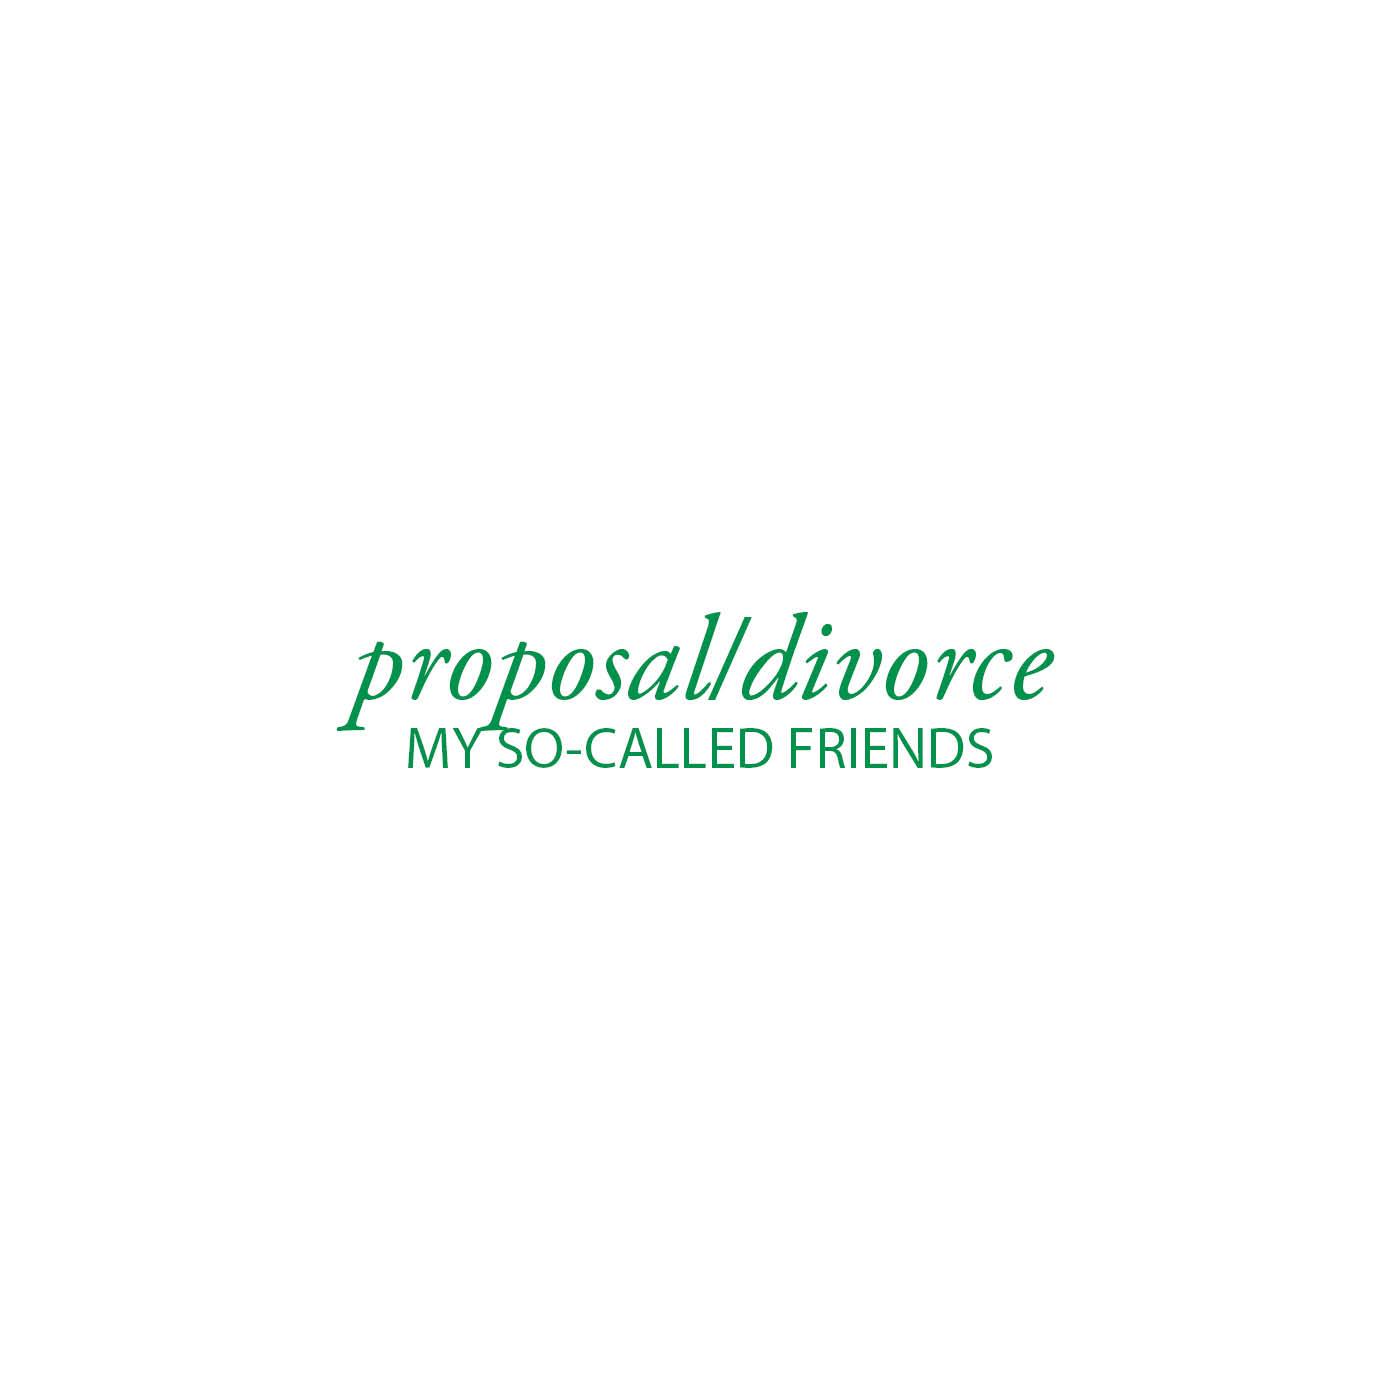 Proposal/divorce